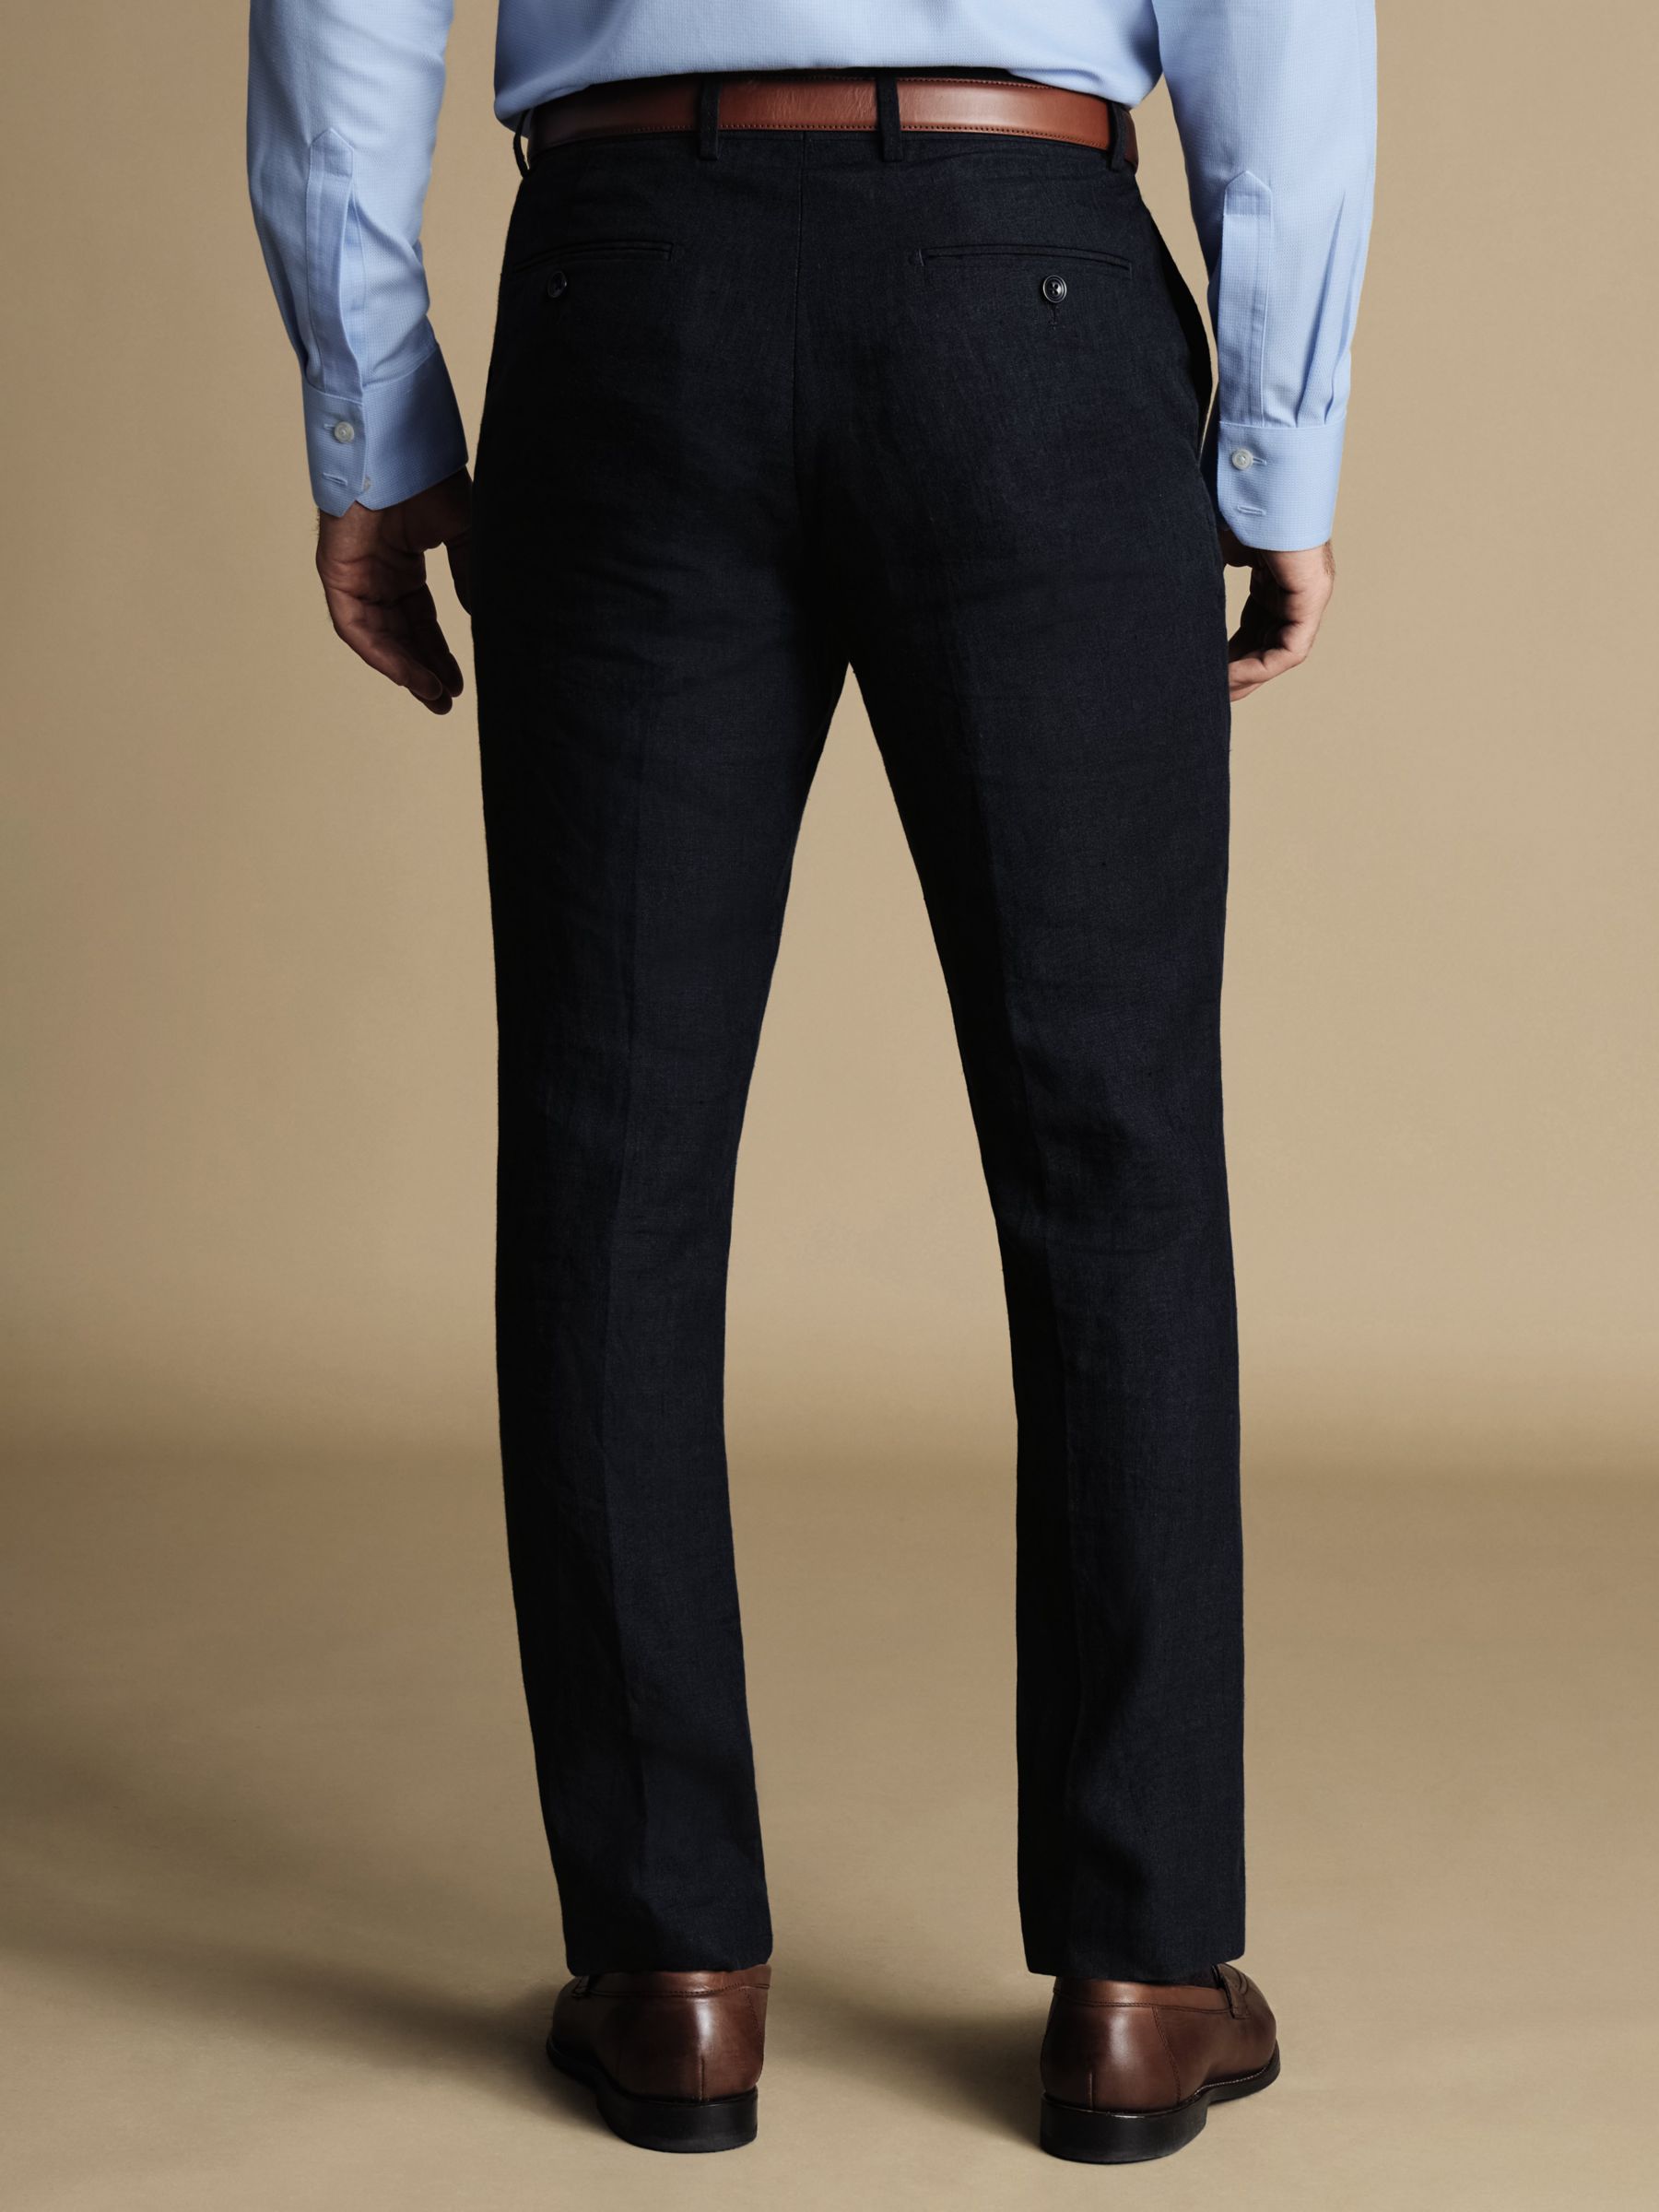 Charles Tyrwhitt Slim Fit Linen Suit Trousers, Dark Navy, W34/L34